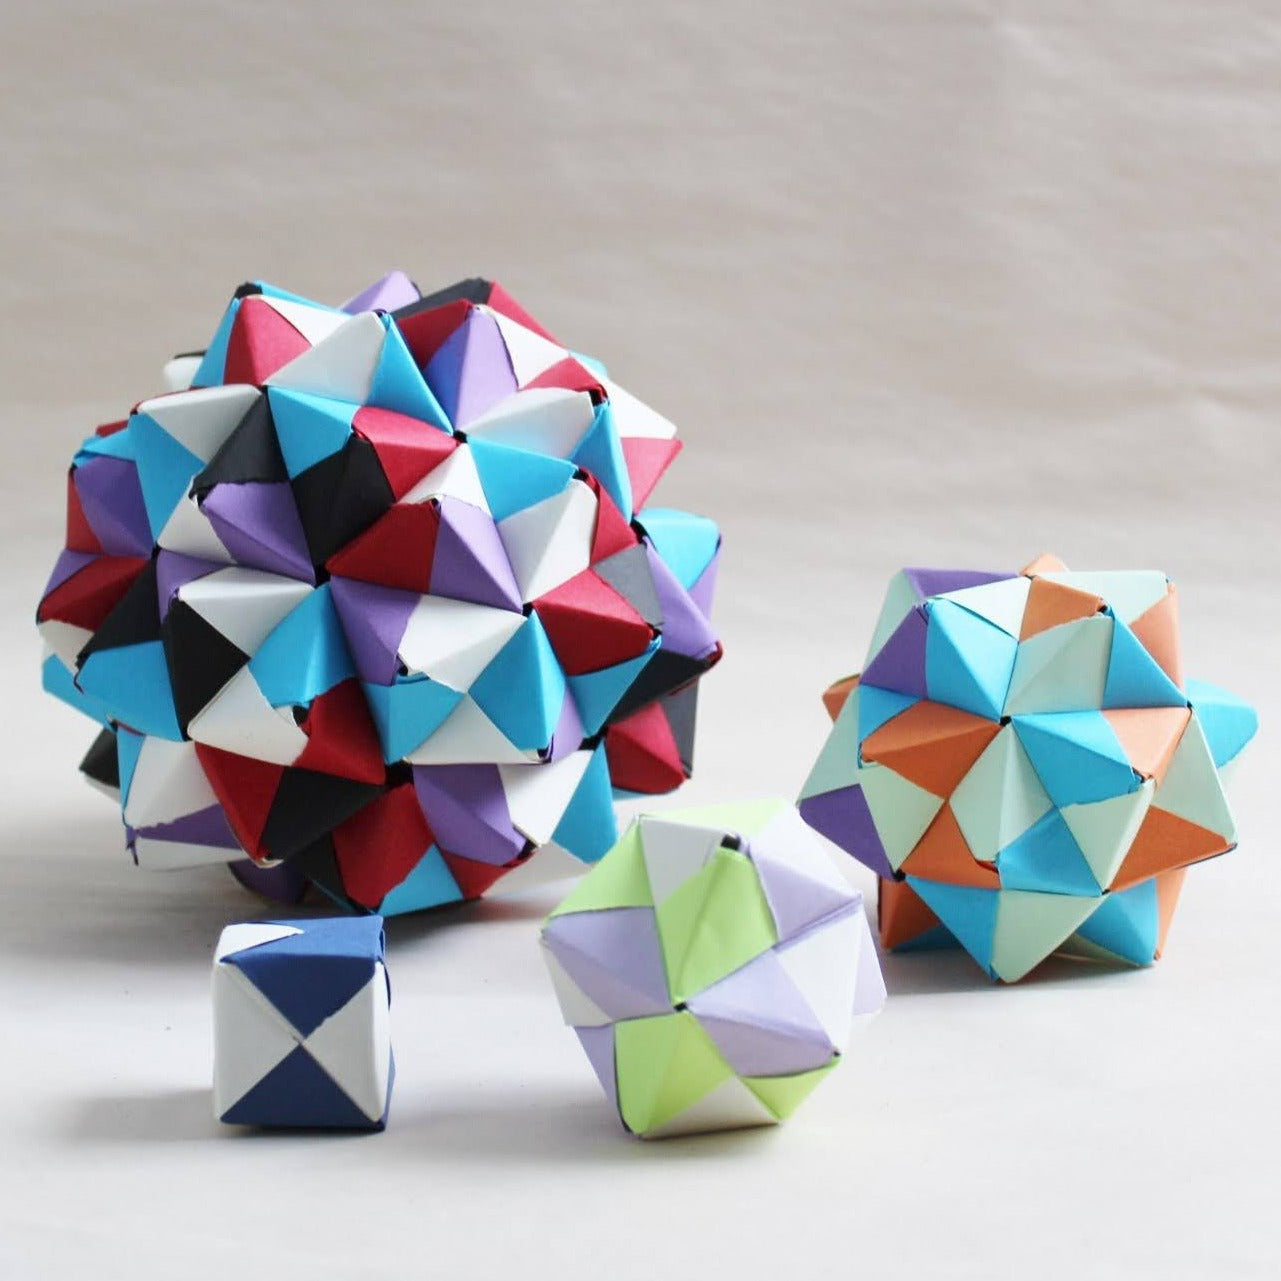 Buy Origami Paper - Large Premium Japanese Made Craft Paper